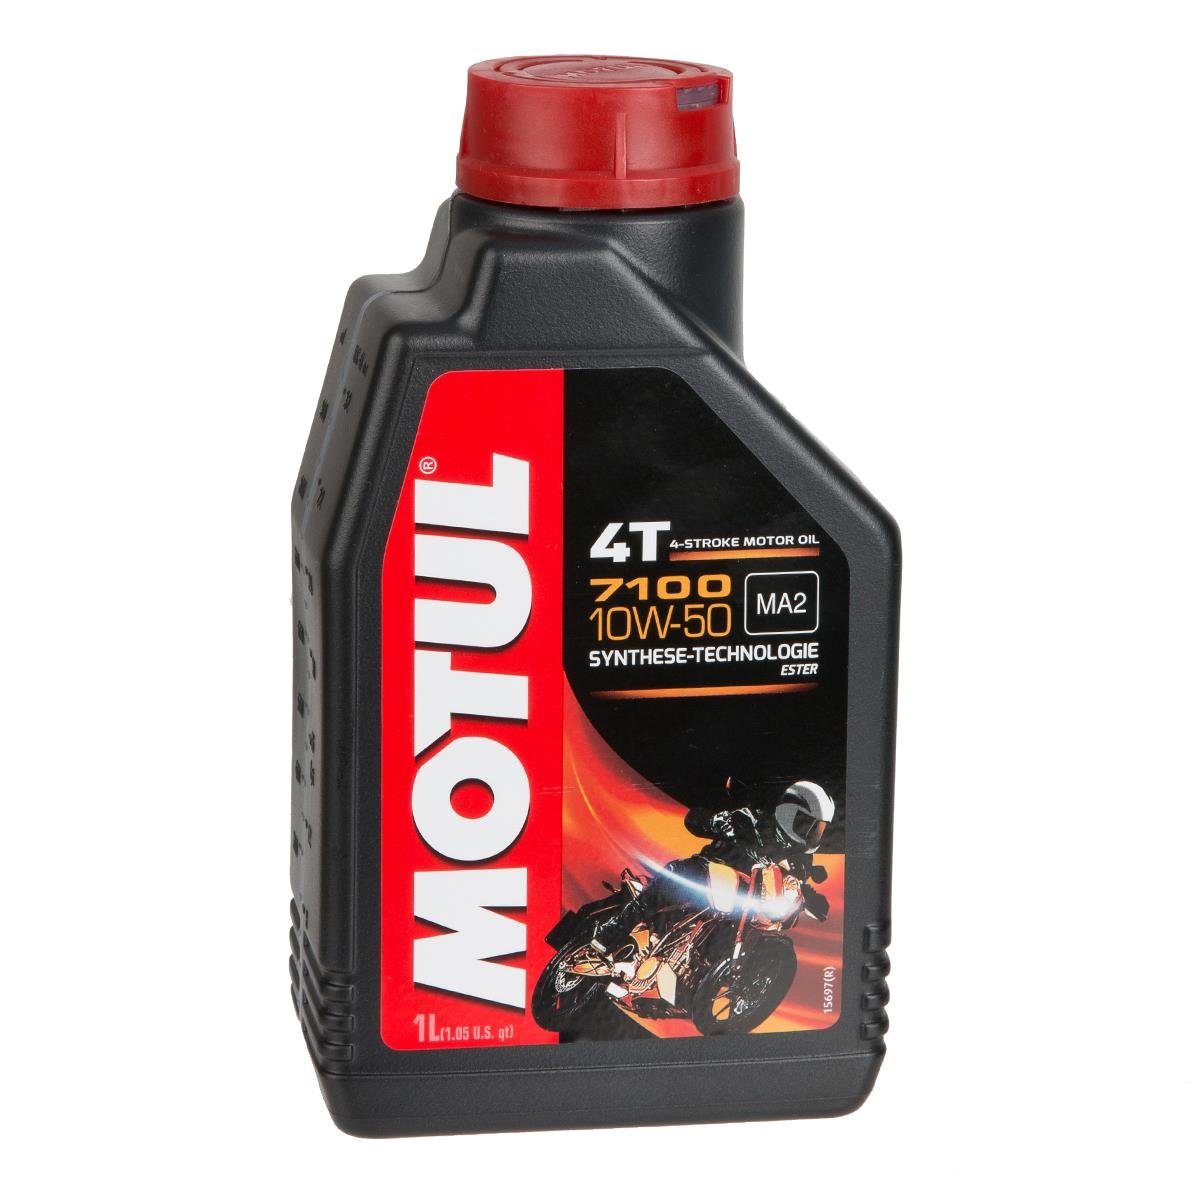 Motul Engine Oil 7100 4T 10W50, 1 Liter